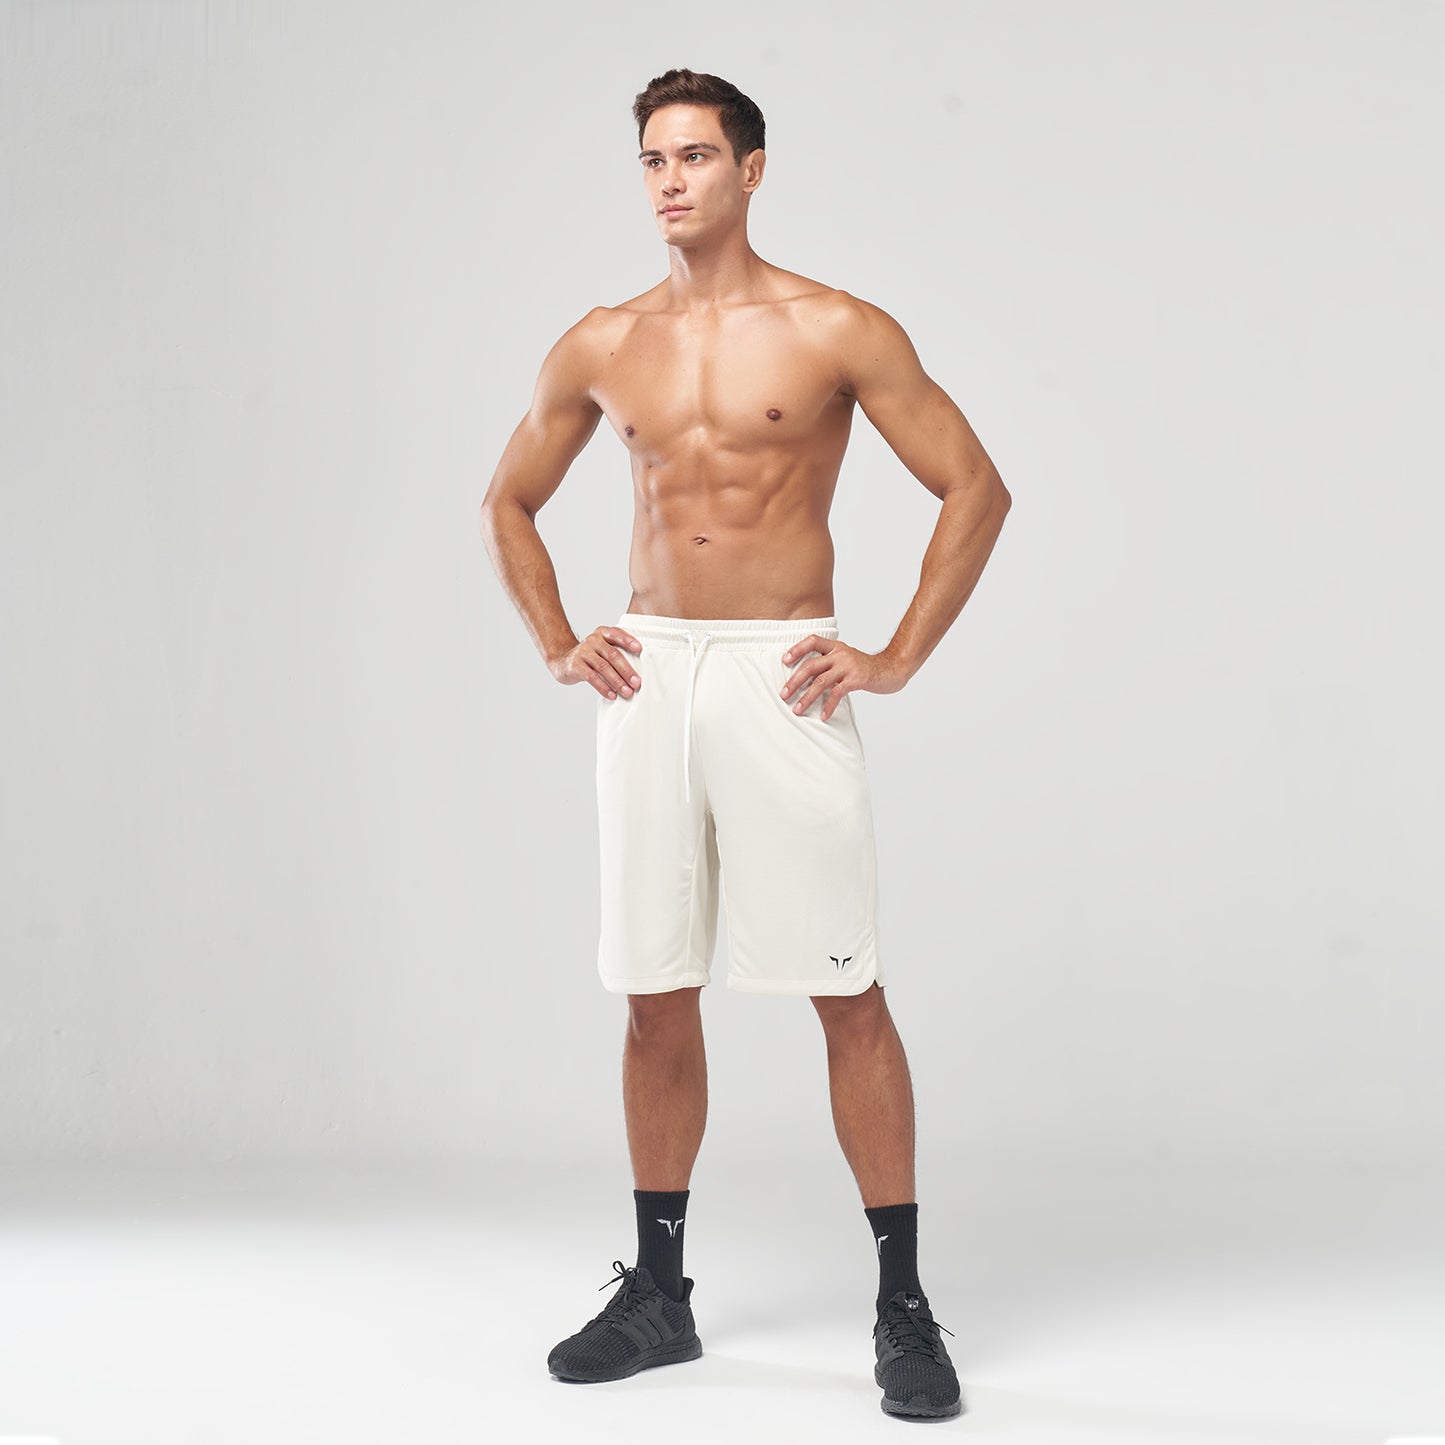 squatwolf-gym-wear-code-basketball-shorts-white-smoke-workout-short-for-men